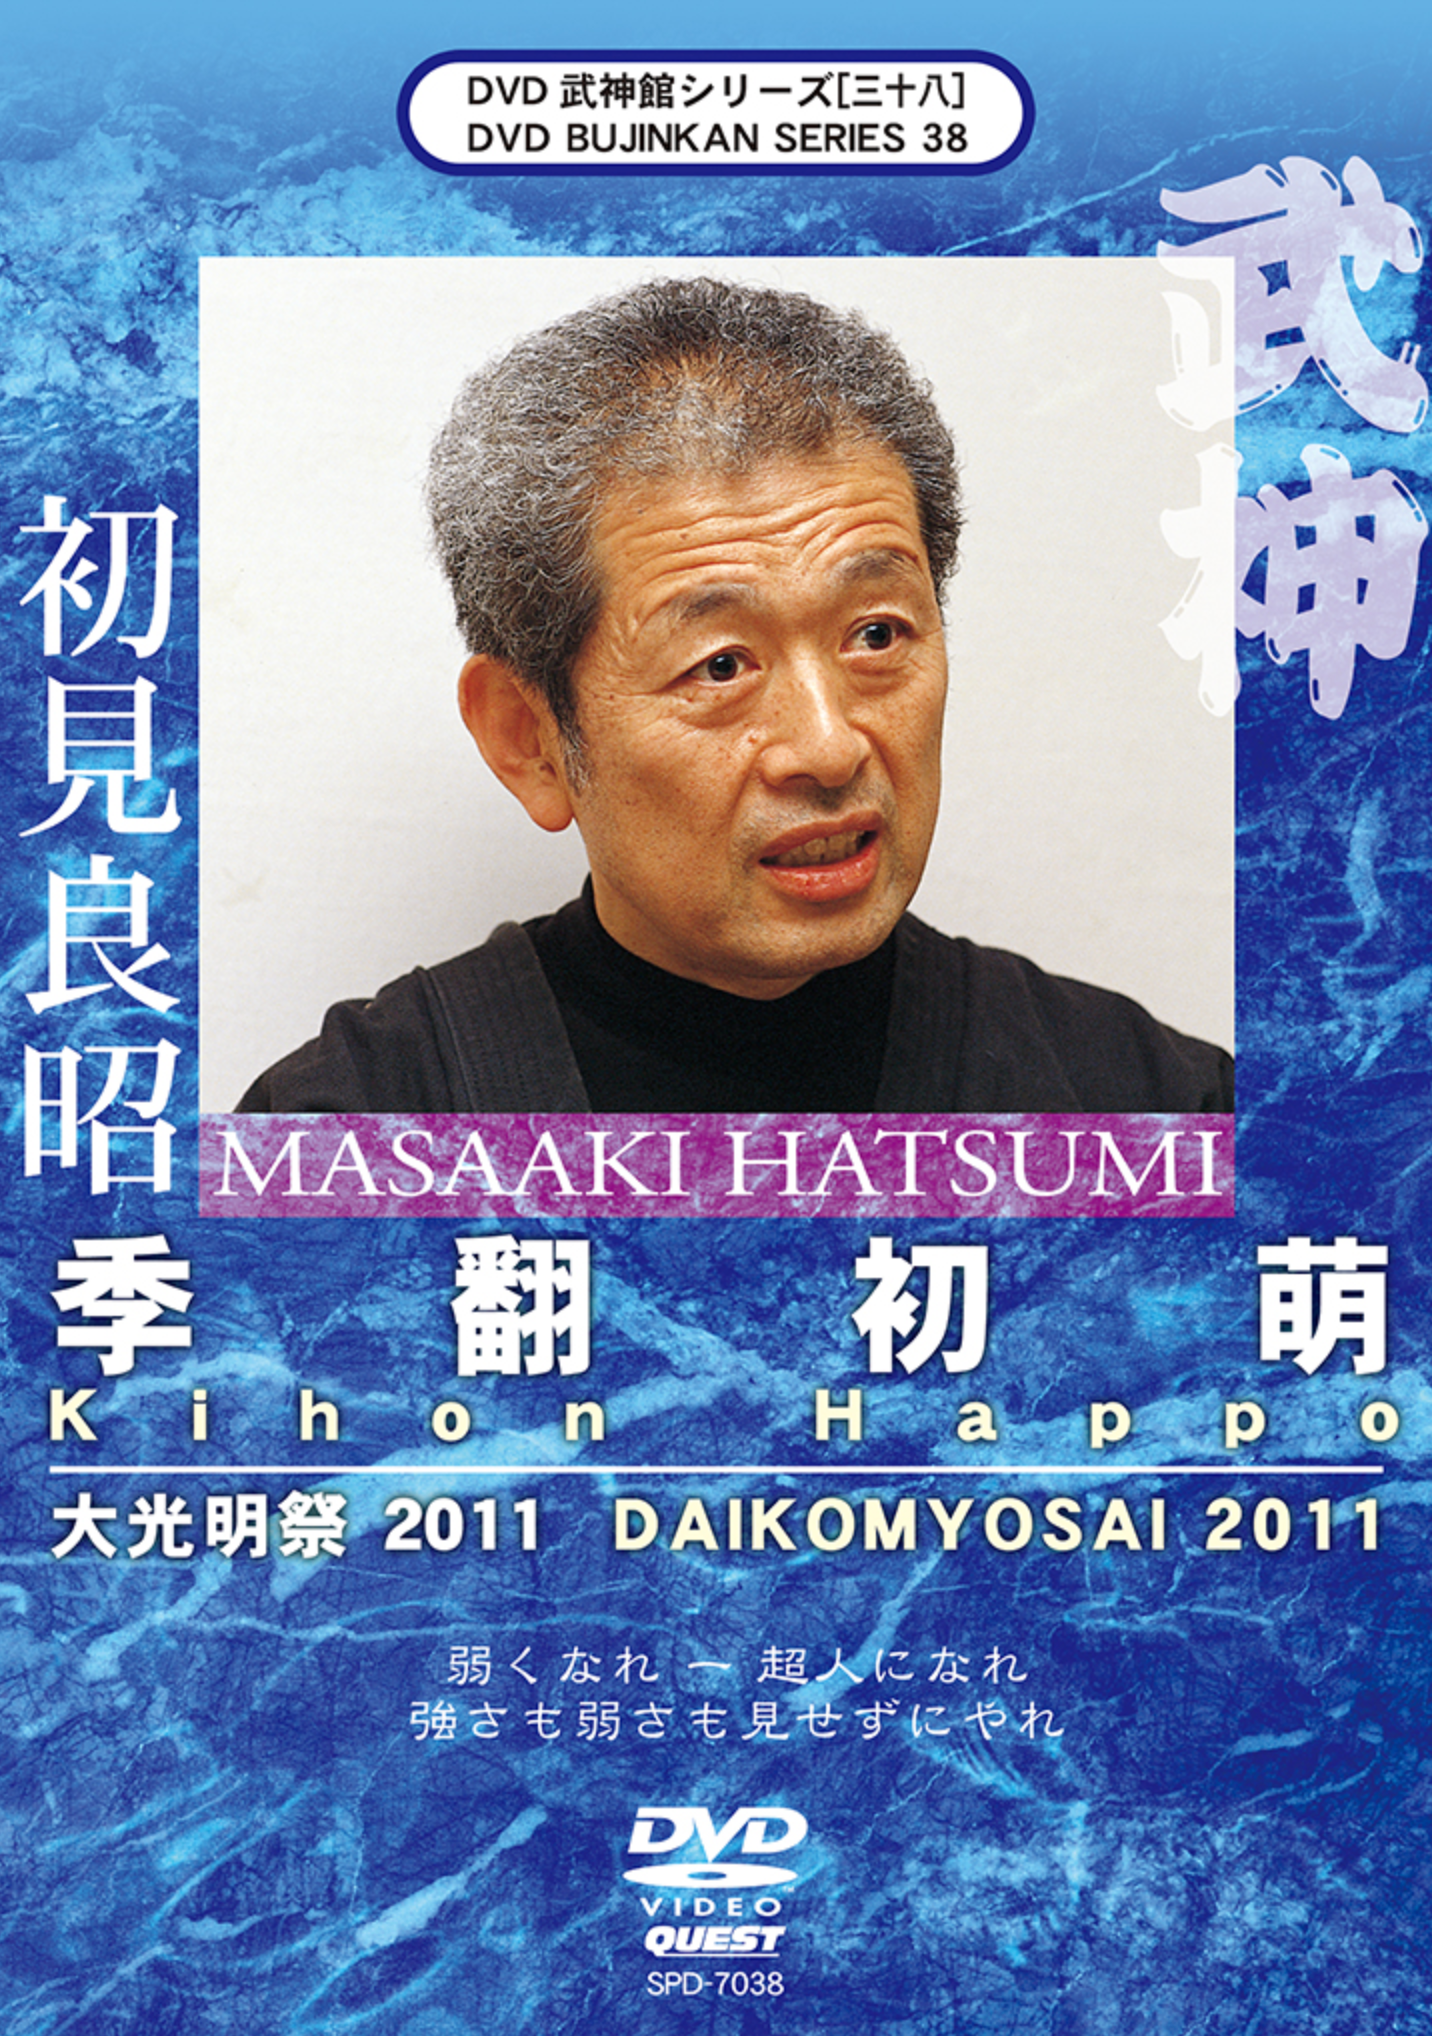 Bujinkan DVD Series 38: Kihon Happo with Masaaki Hatsumi - Budovideos Inc